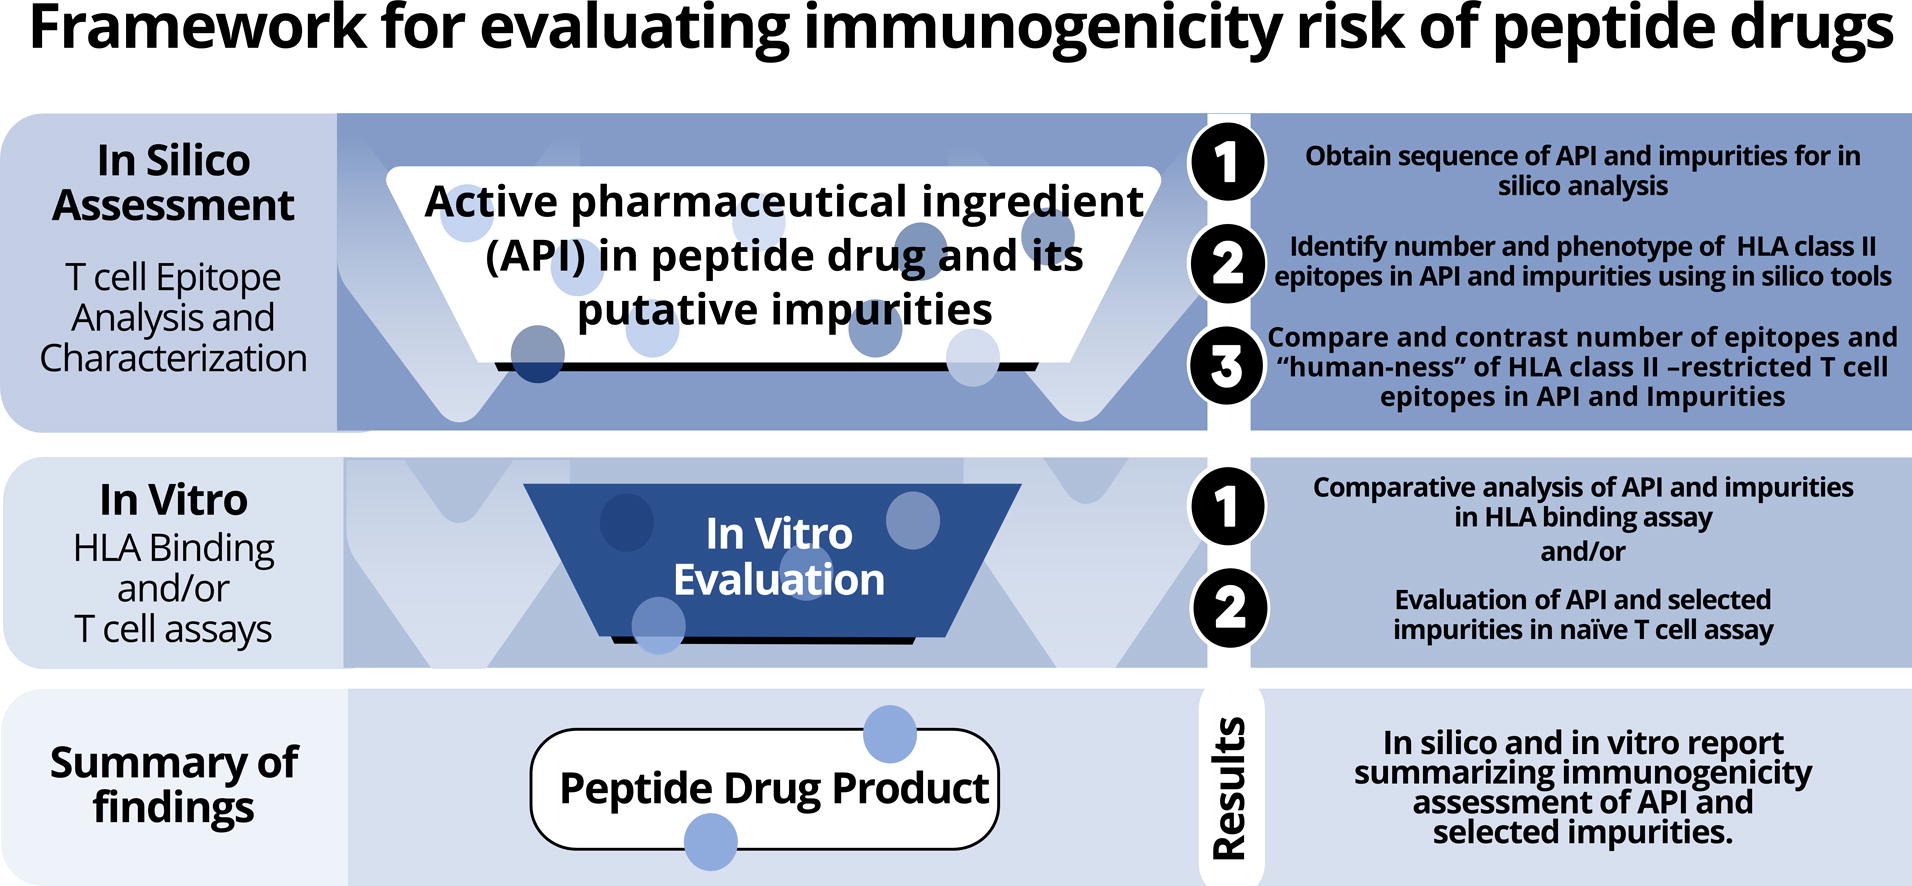 The framework for evaluating the immunogenicity risk of peptide drugs. 